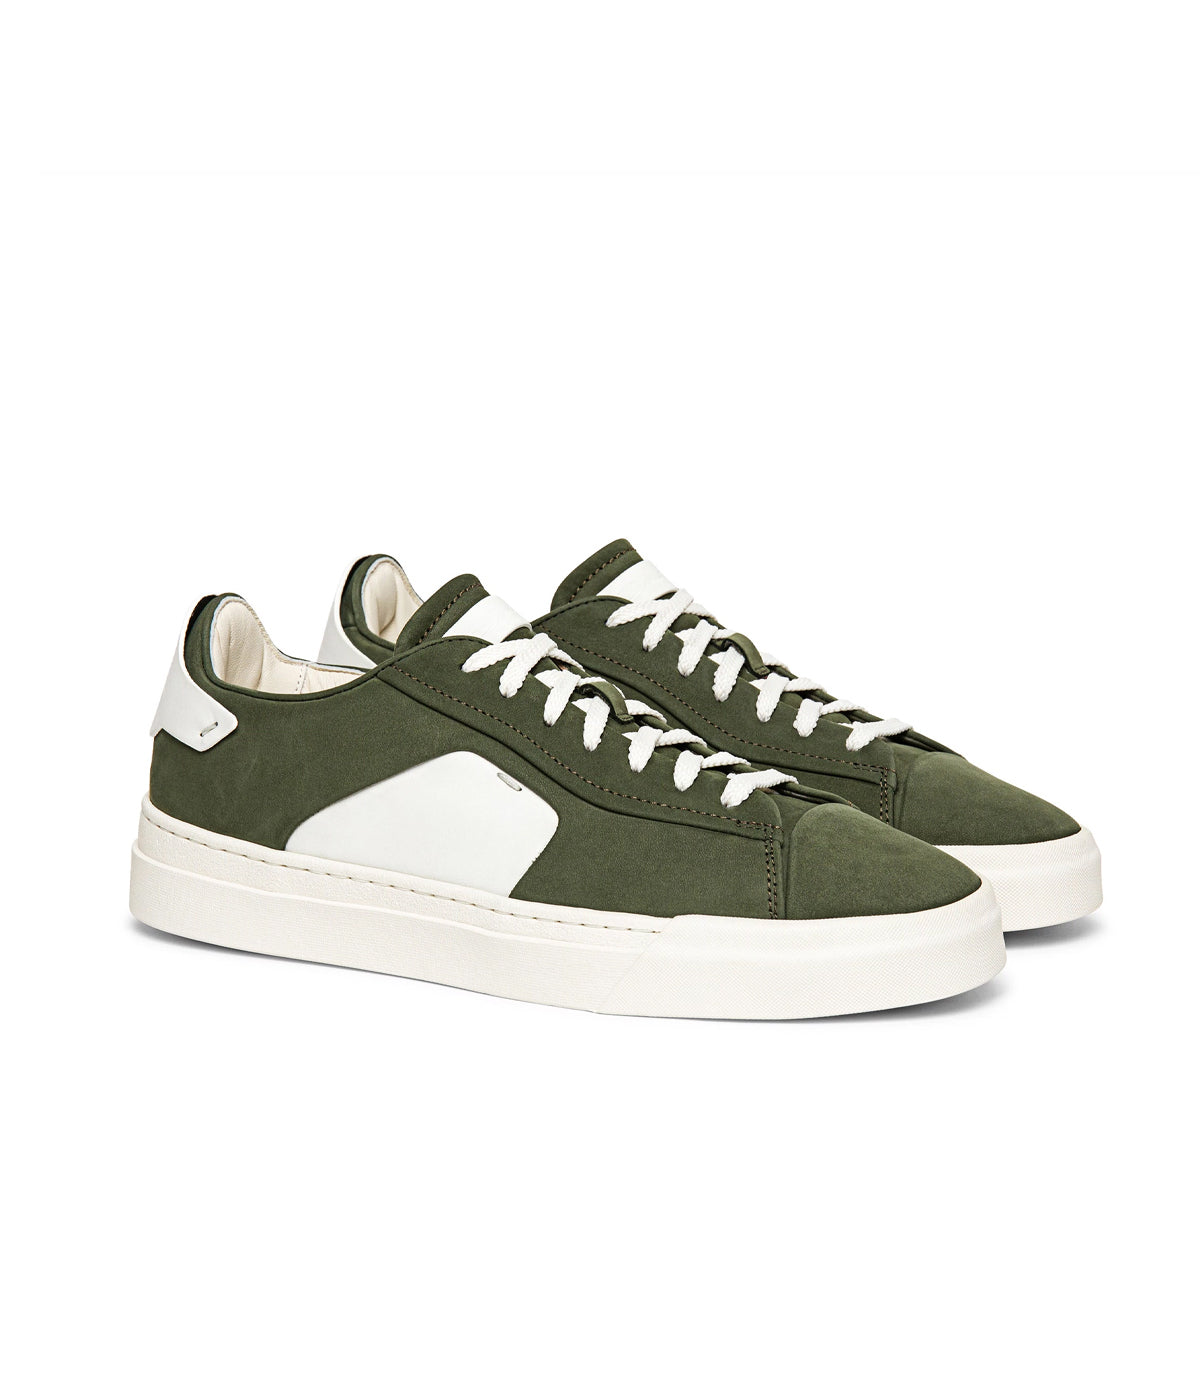 Darts Nubuck Low Top Sneakers in Olive Green